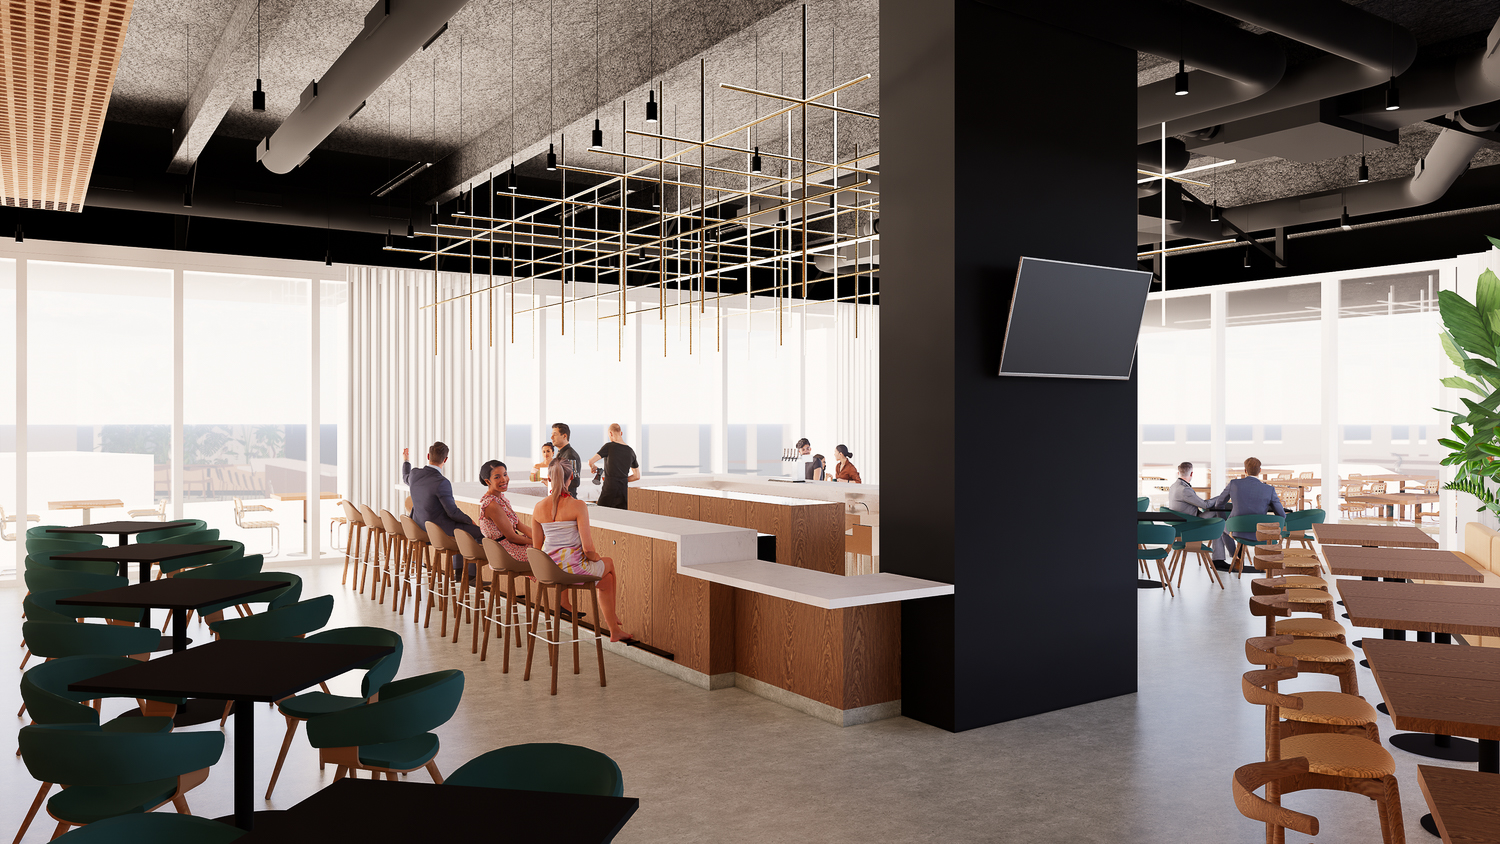 Genesis Marina bar interior, rendering courtesy Skidmore, Owings & Merrill